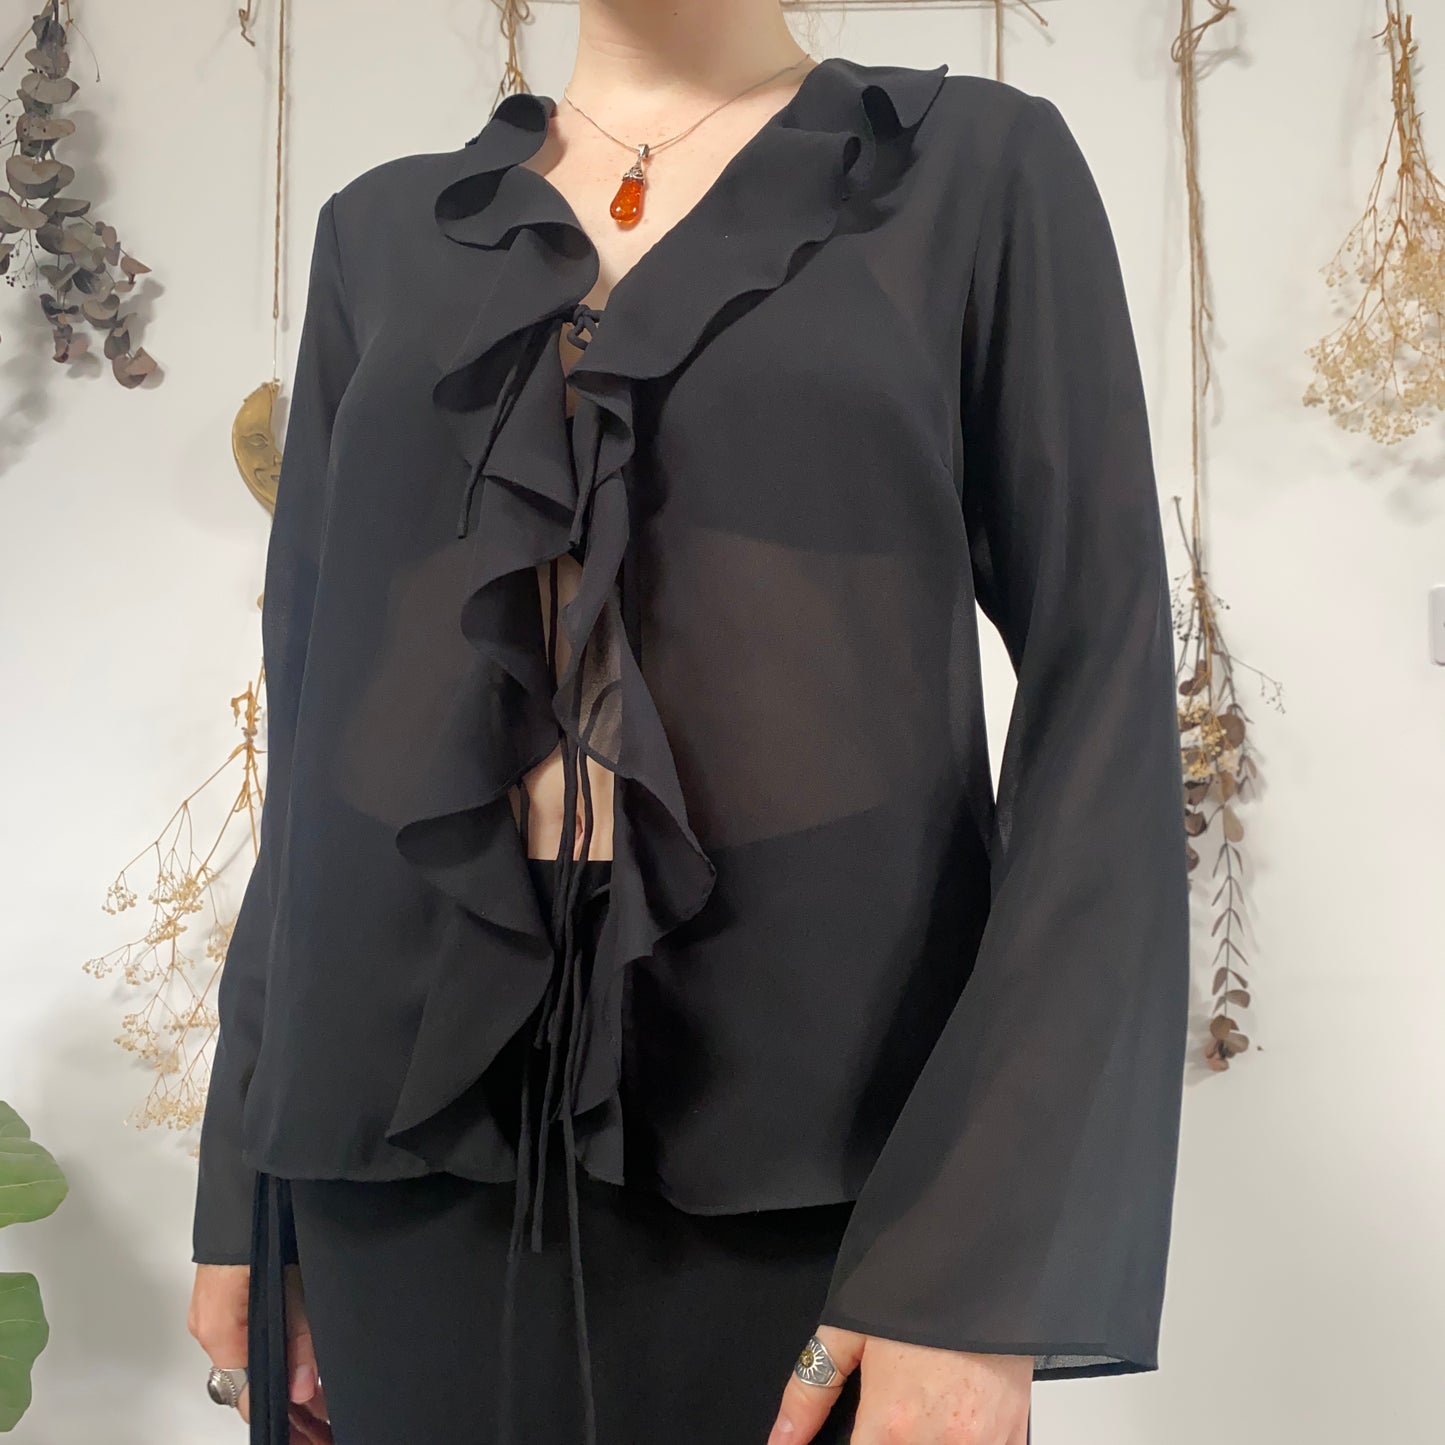 Black ruffle blouse - size L